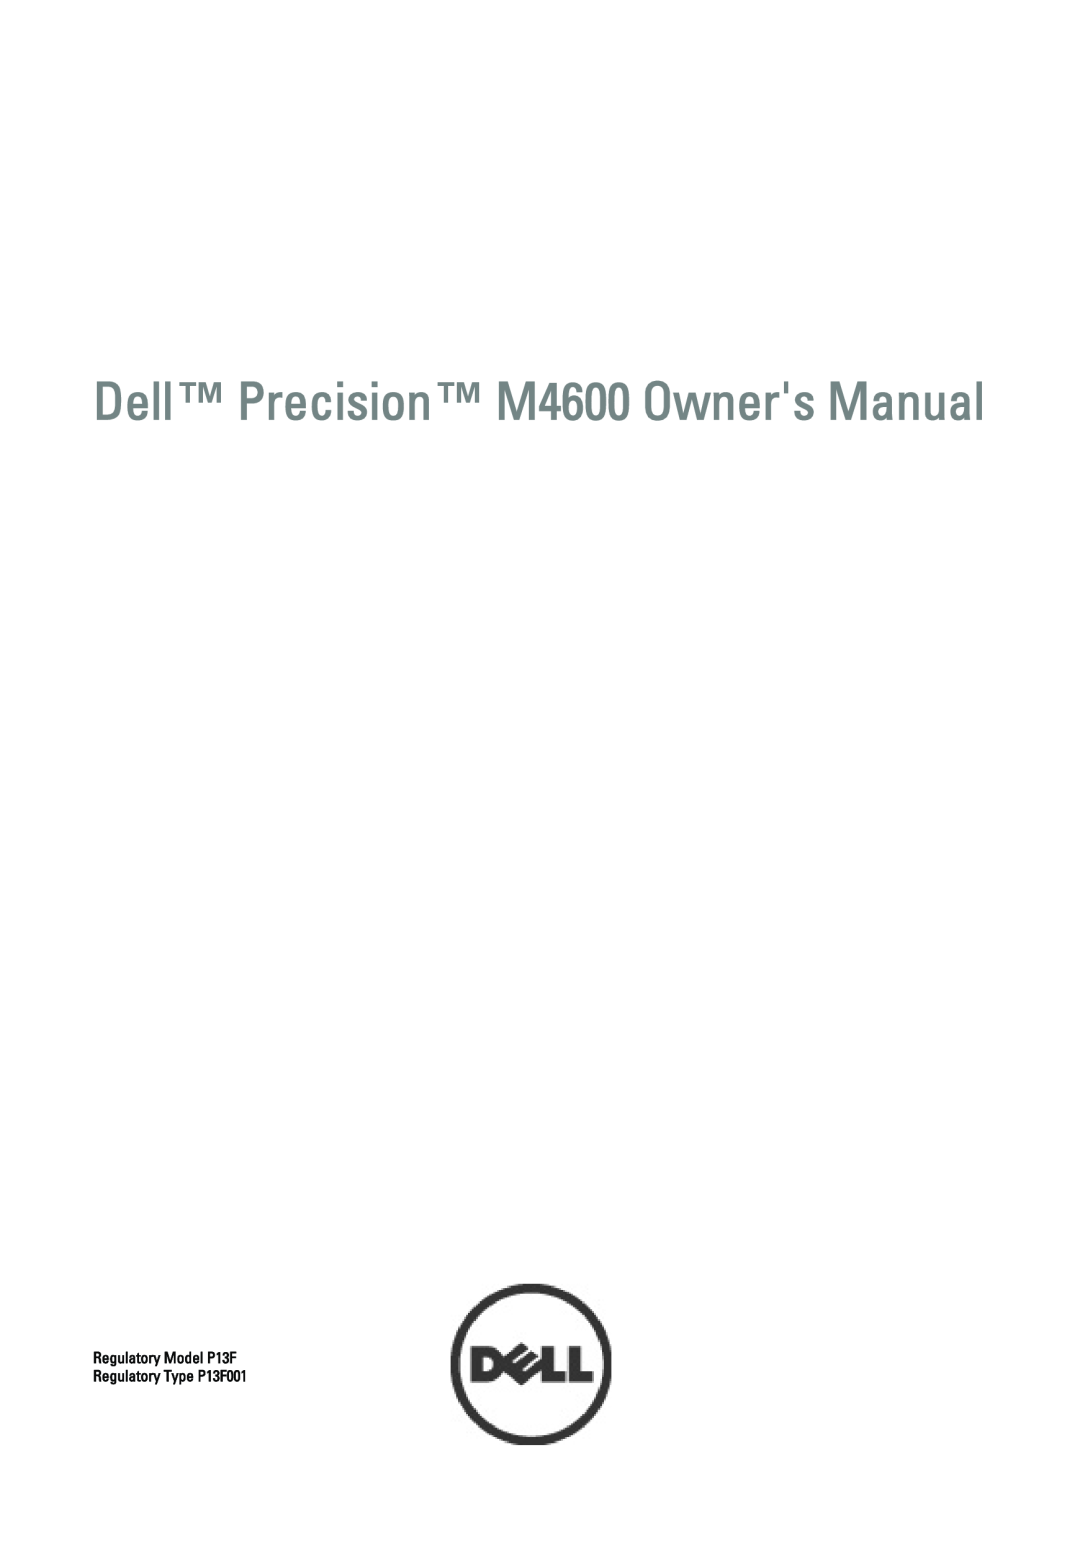 Dell M4600 owner manual Regulatory Model P13F Regulatory Type P13F001 